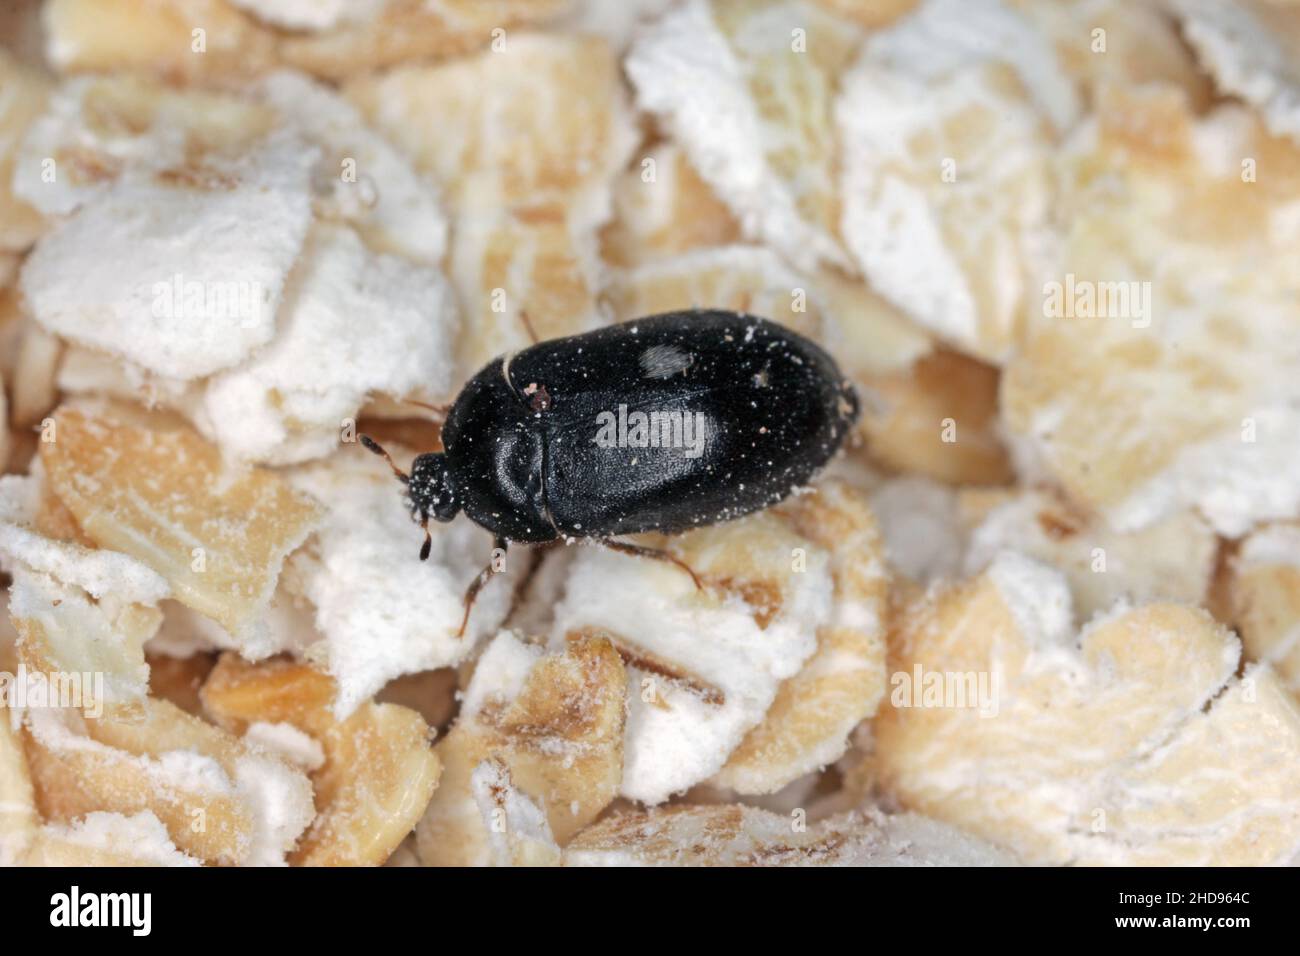 Female of Attagenus pellio the fur beetle or carpet beetle from the family Dermestidae a skin beetles. Stock Photo